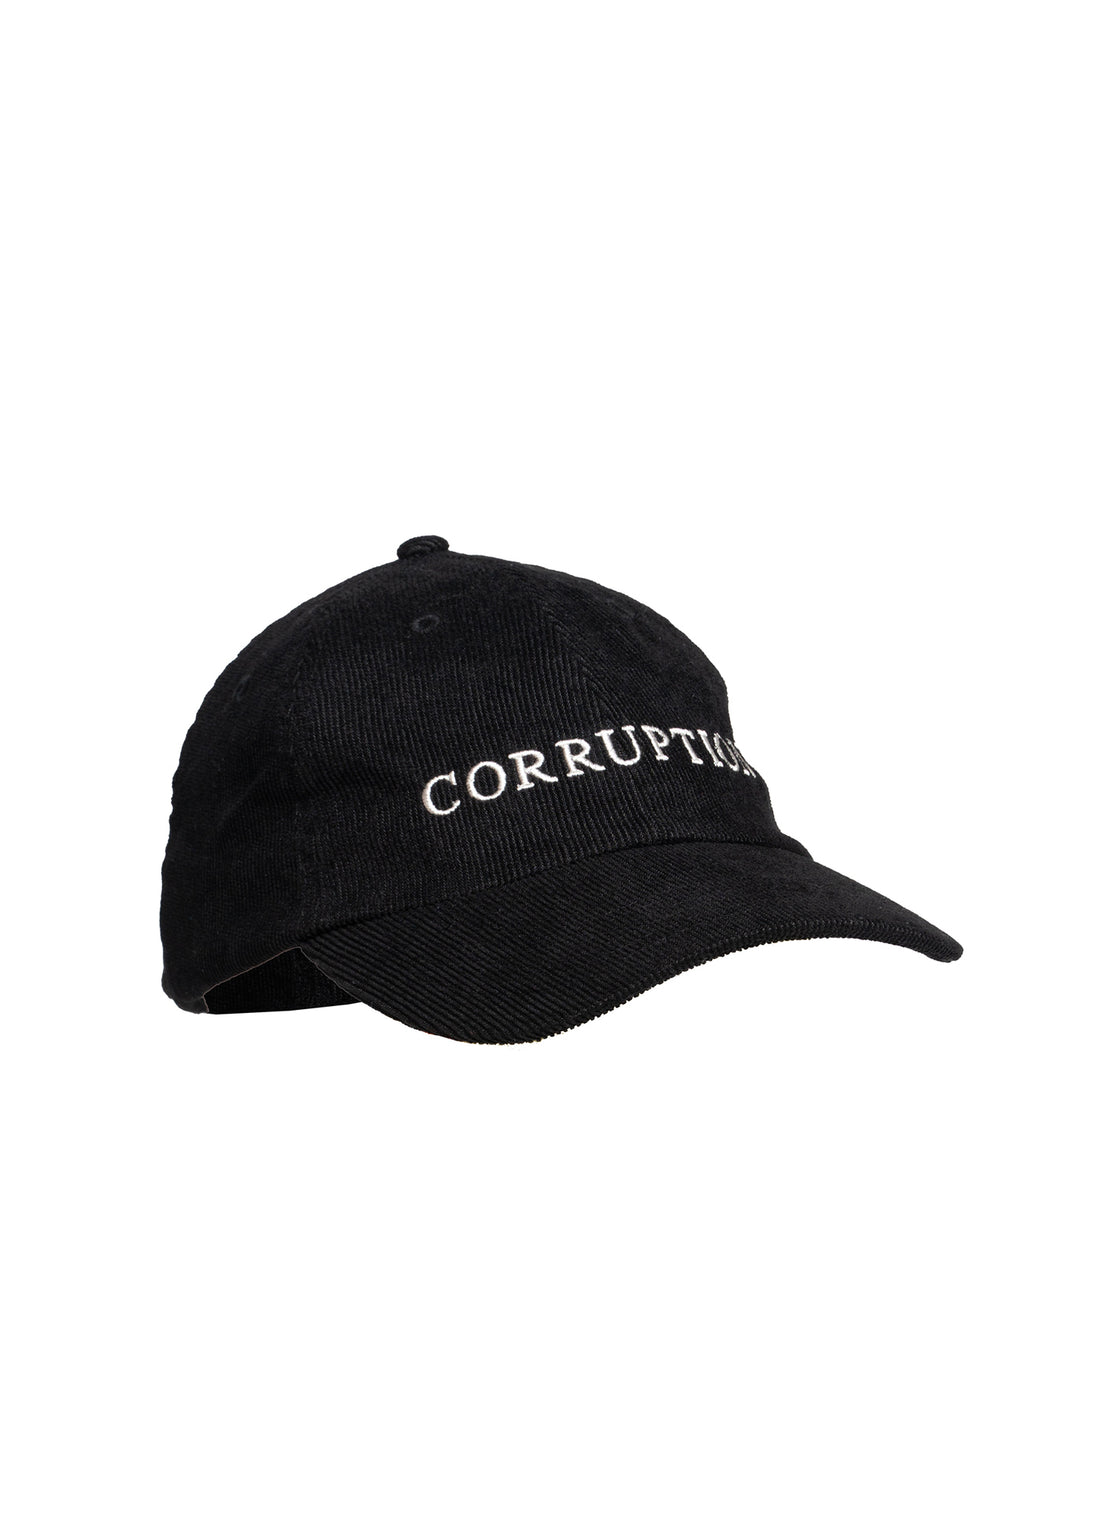 Corruption Cap